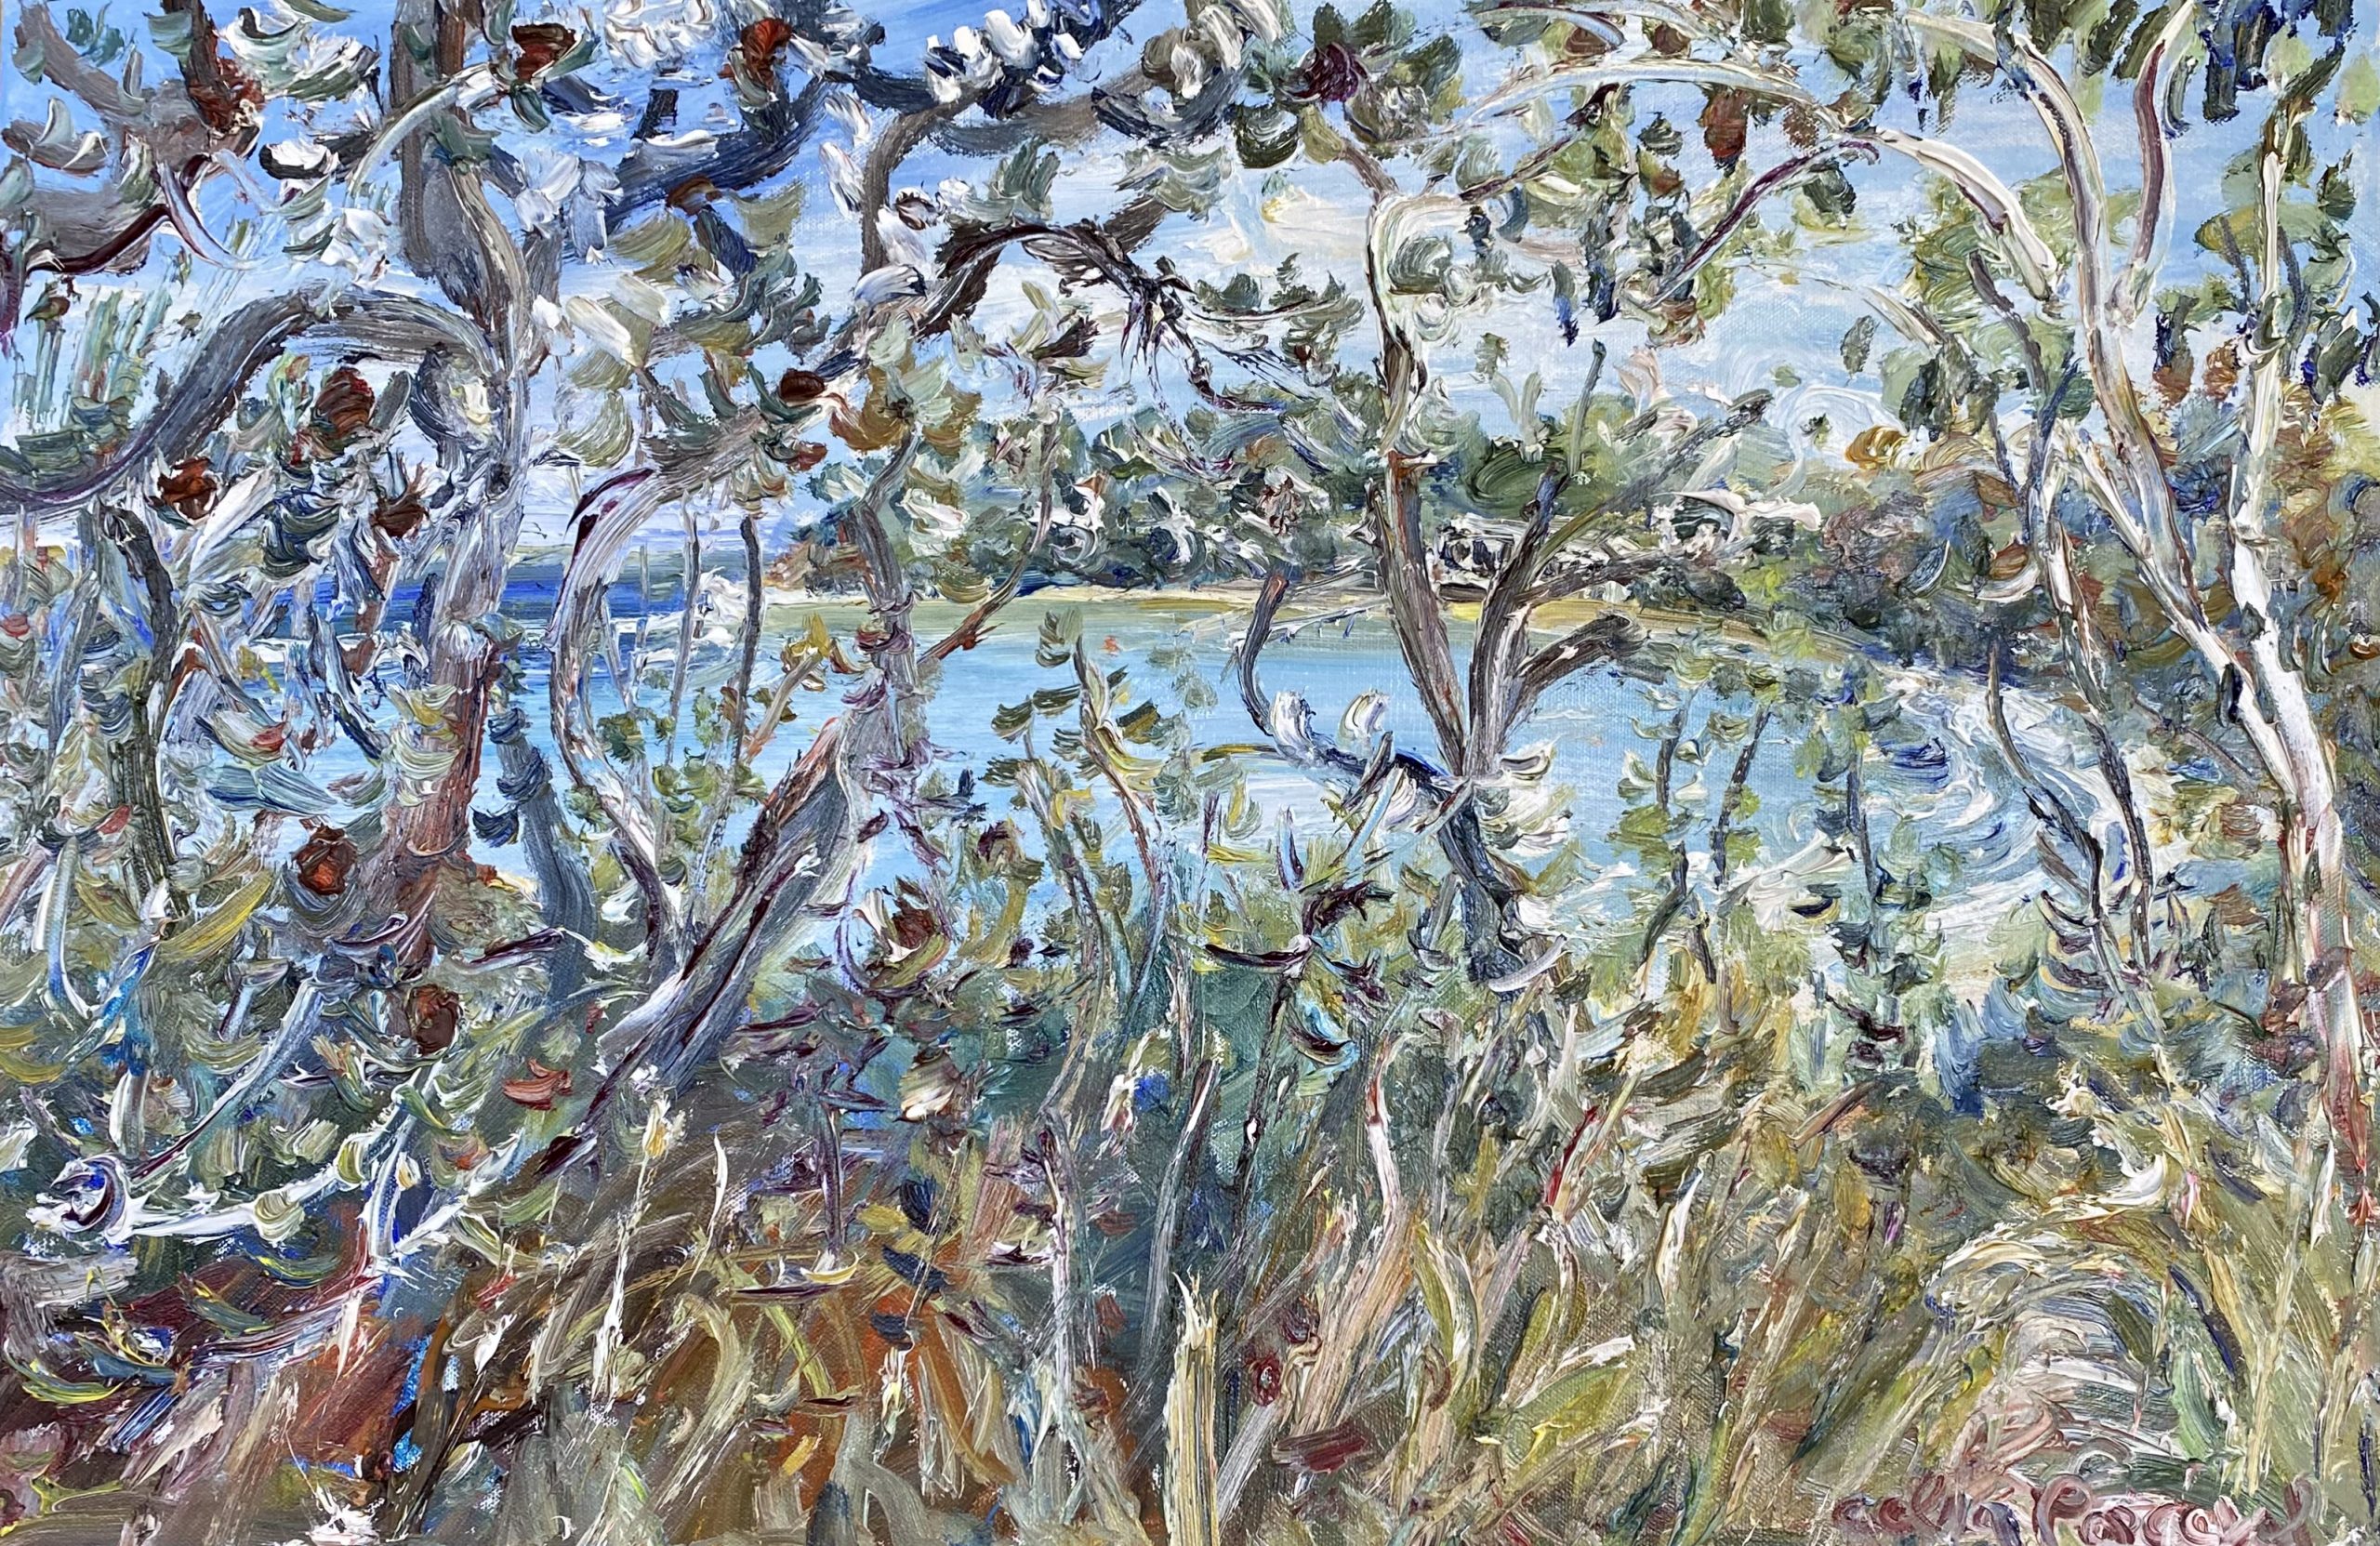 Celia Perceval 'Landscape at Point Leo ' oil on canvas 50 x 77cm $9,500